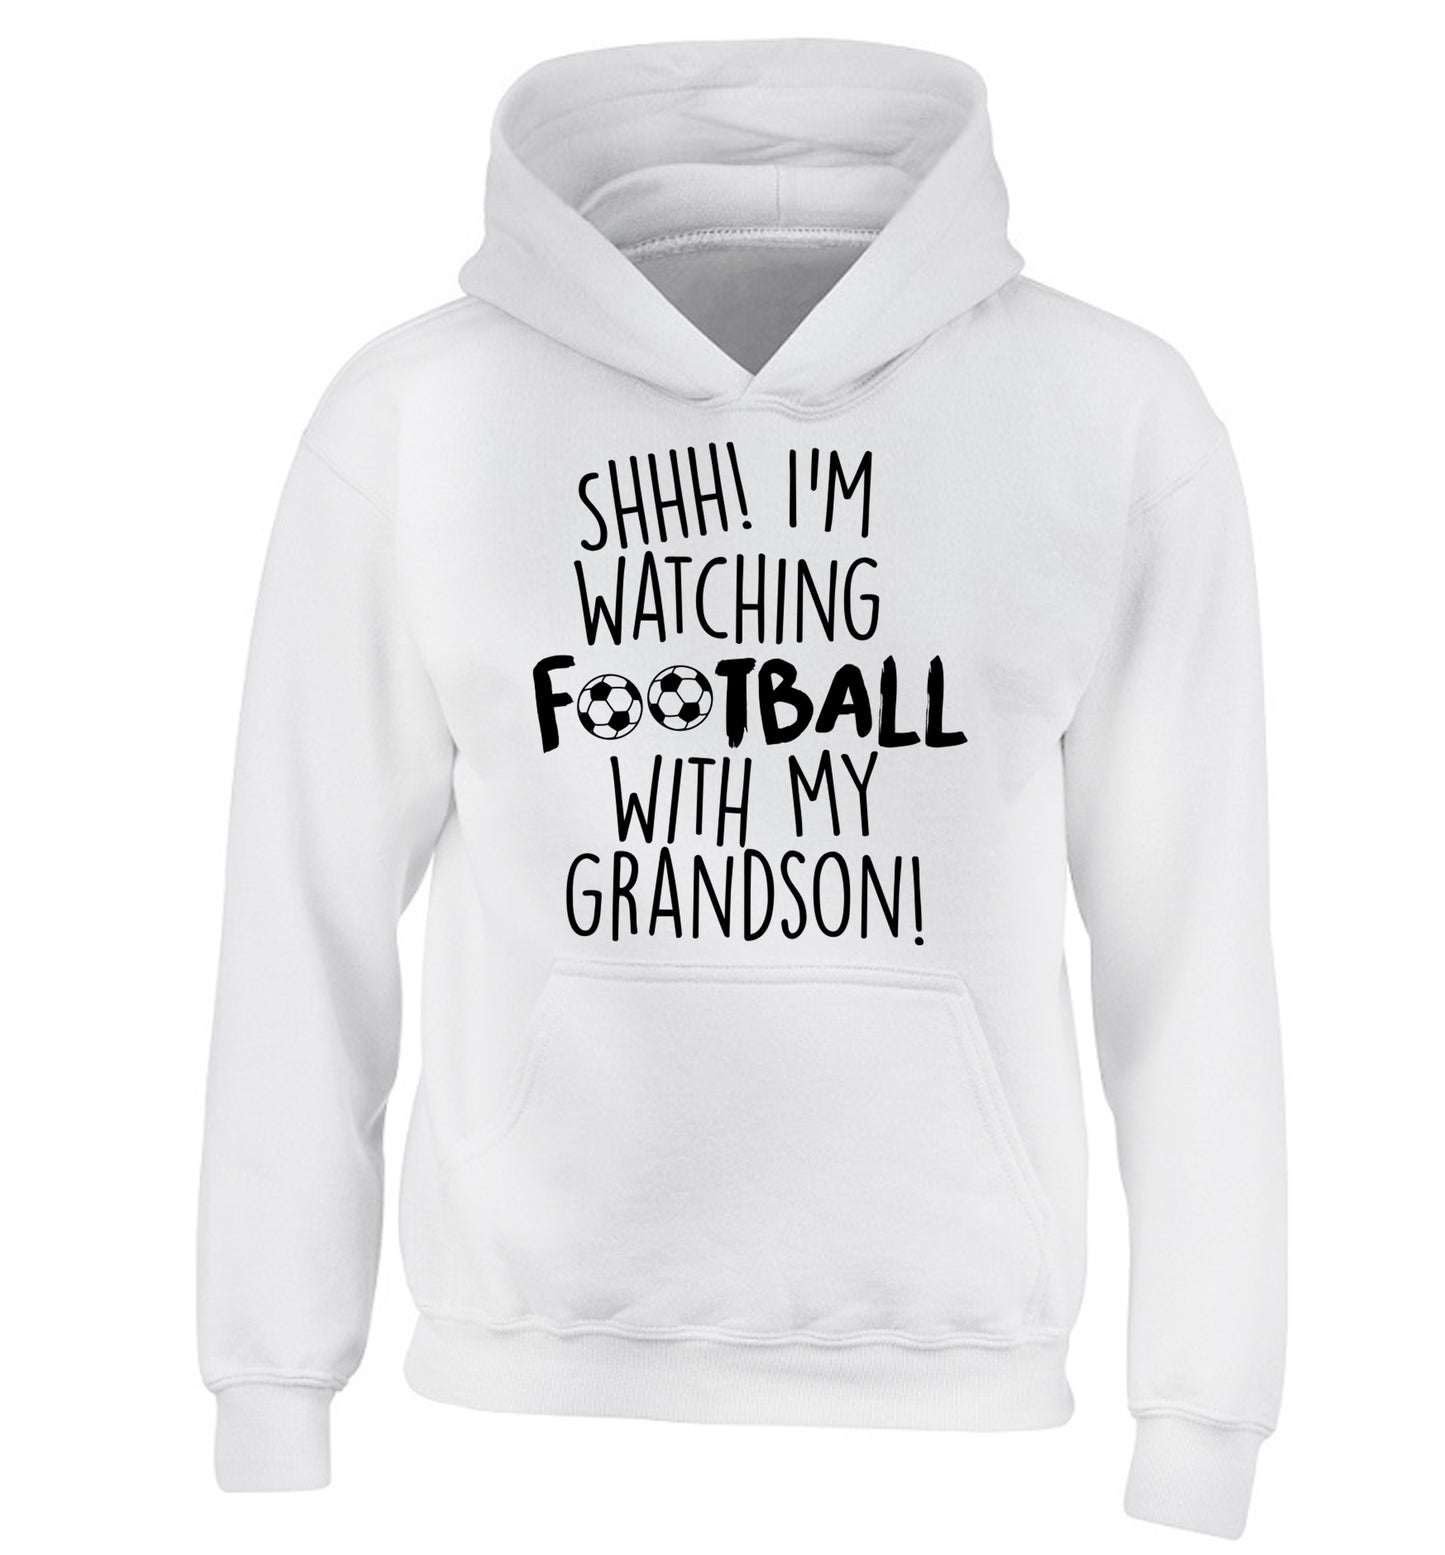 Shhh I'm watching football with my grandson children's white hoodie 12-14 Years